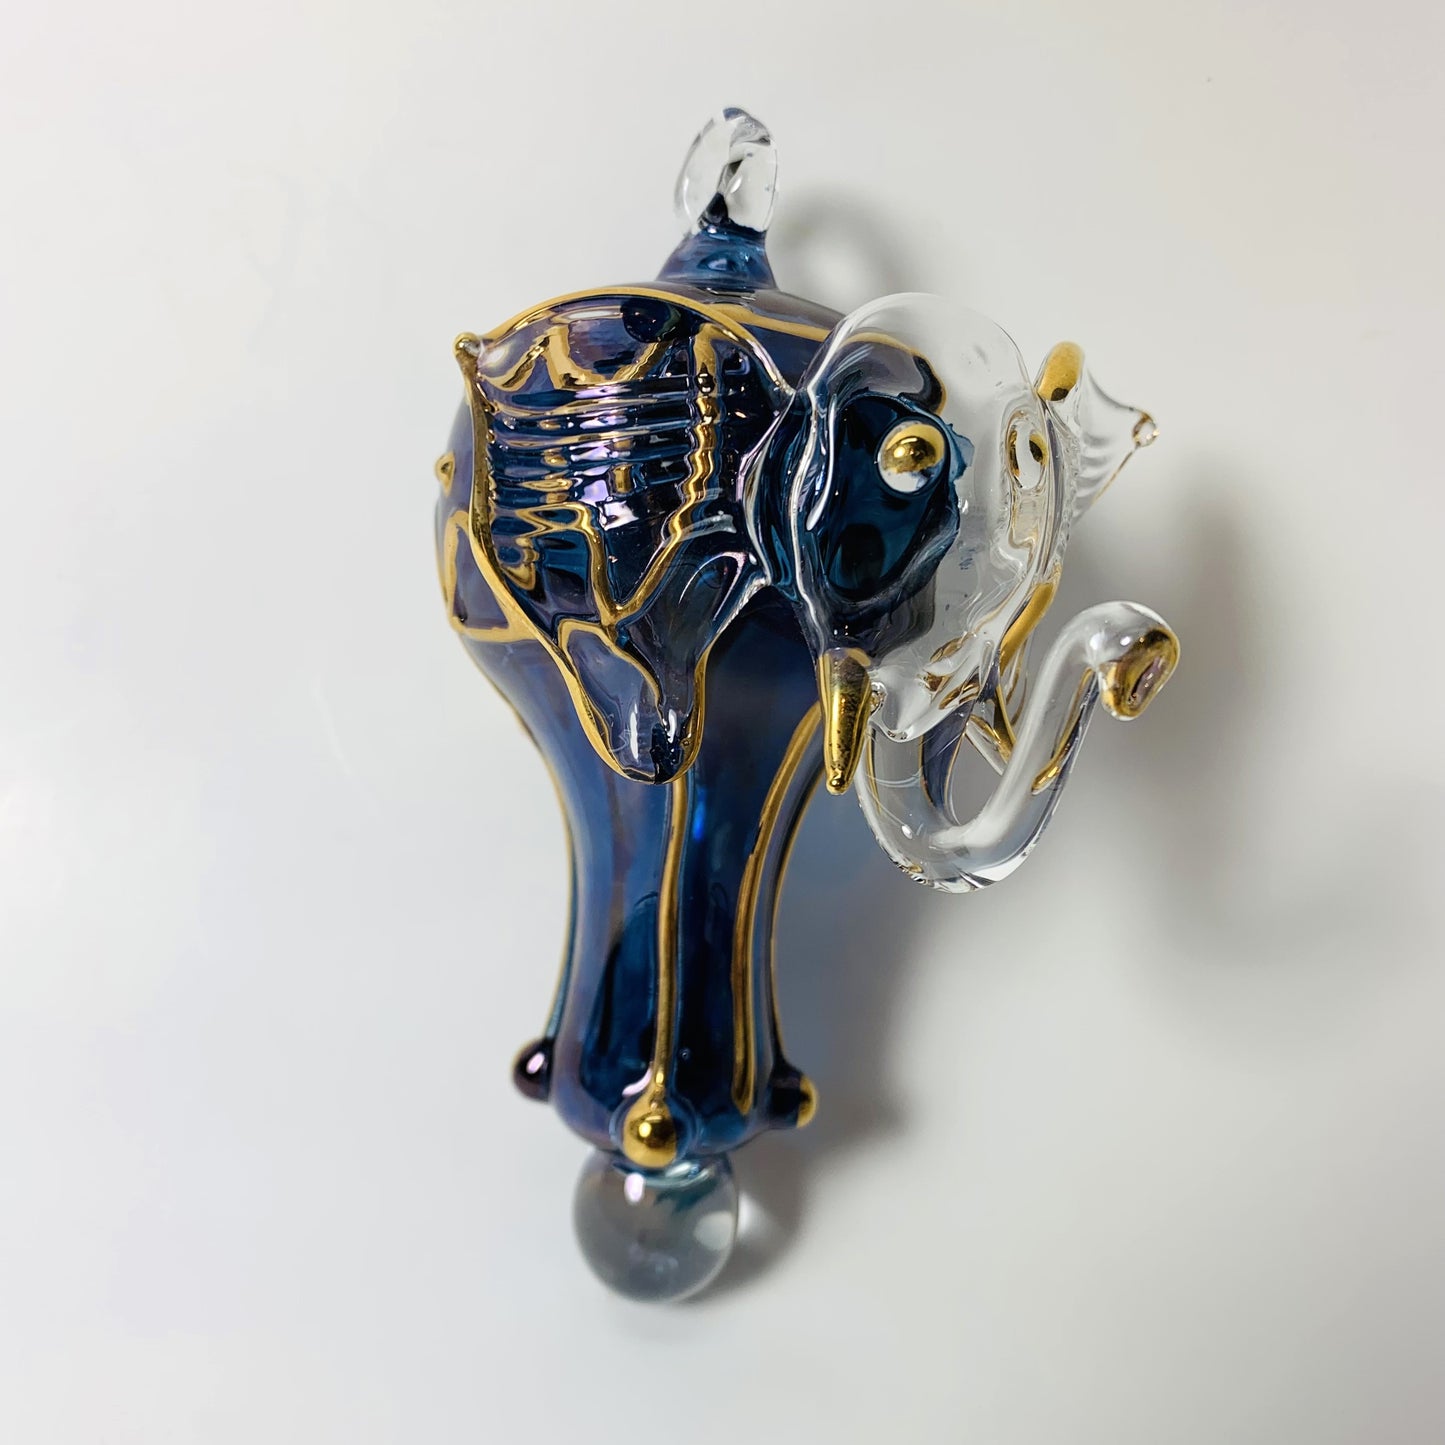 Blown Glass Ornament - Elephant Blue